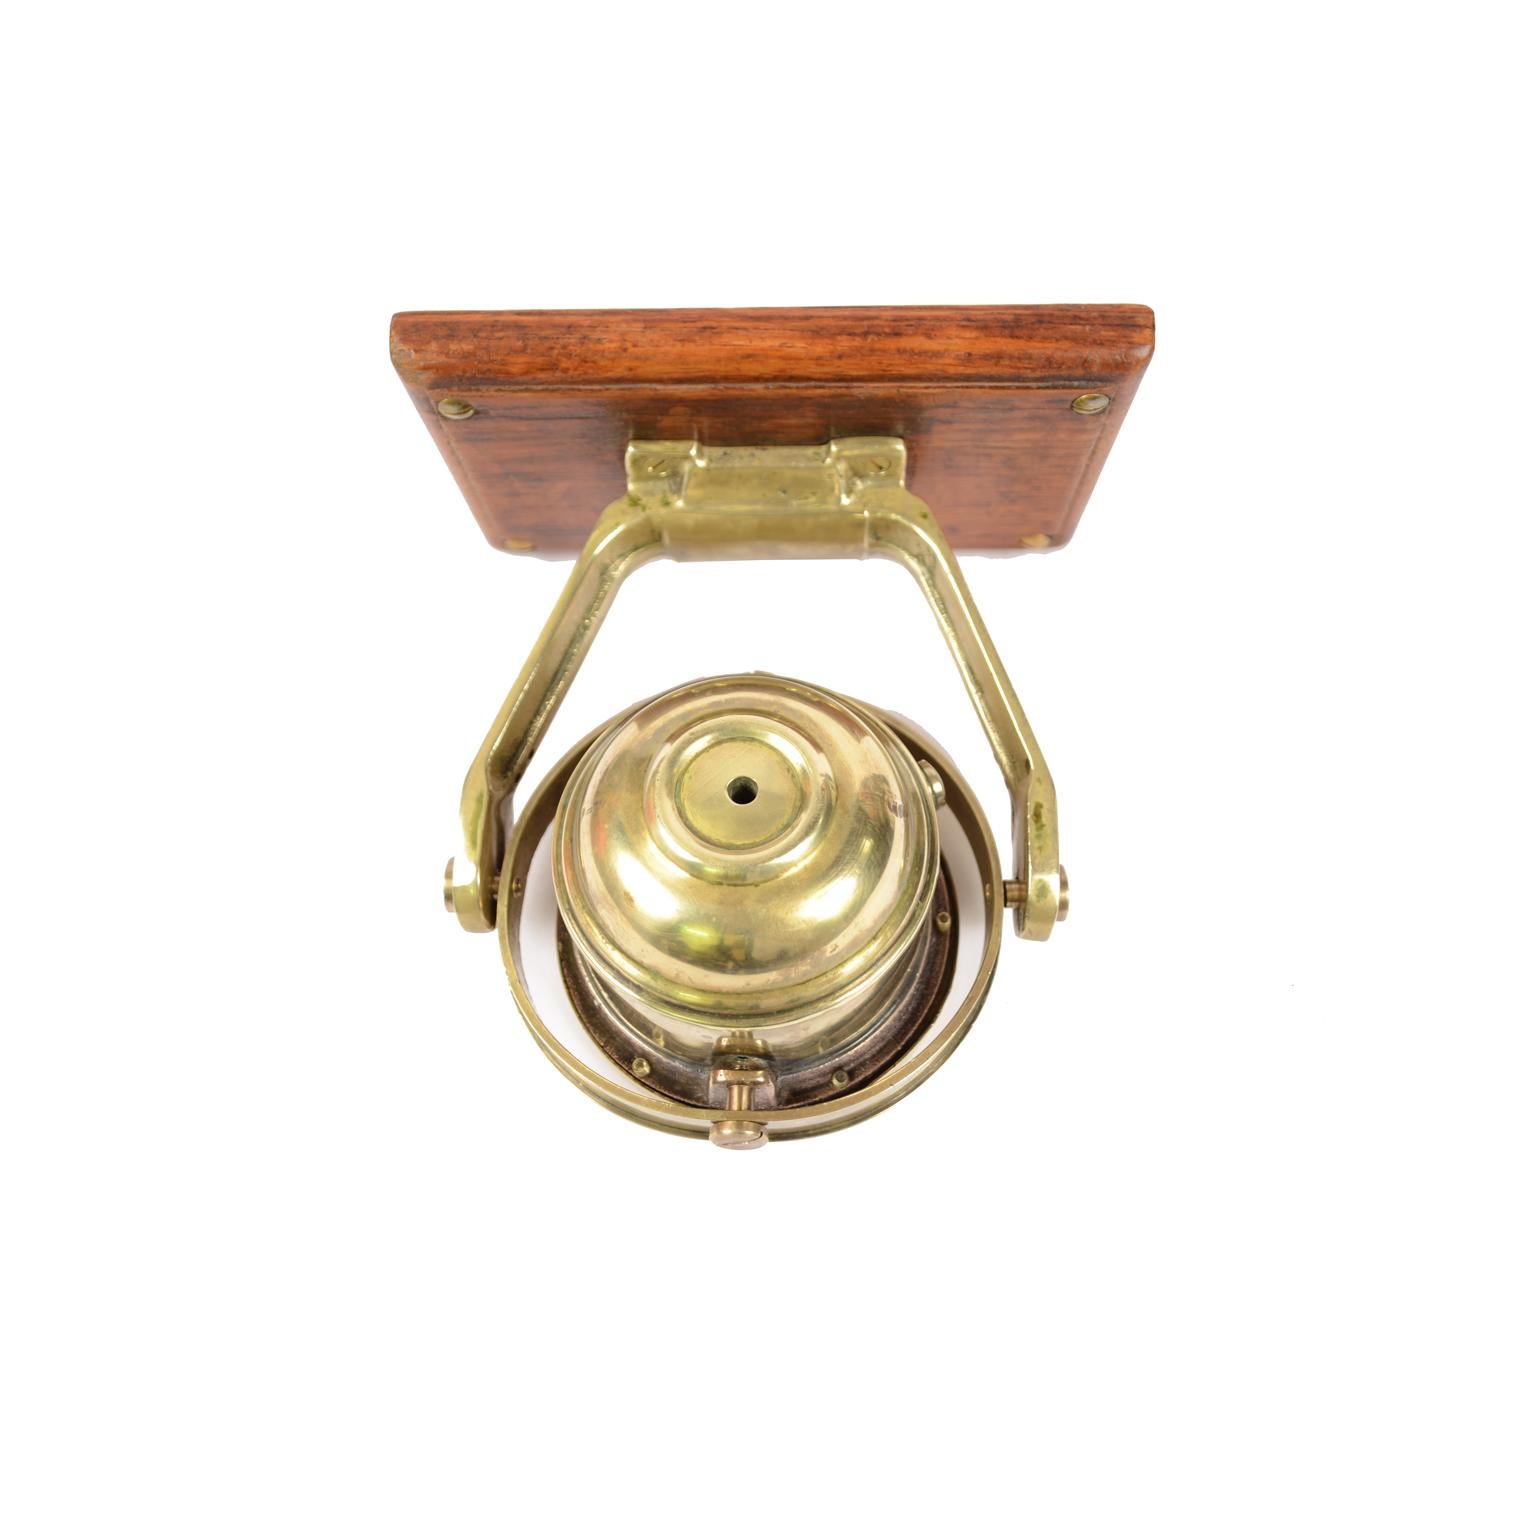 British Brass and Glass Nautical Compass on Oak Wooden Board, London, 1860